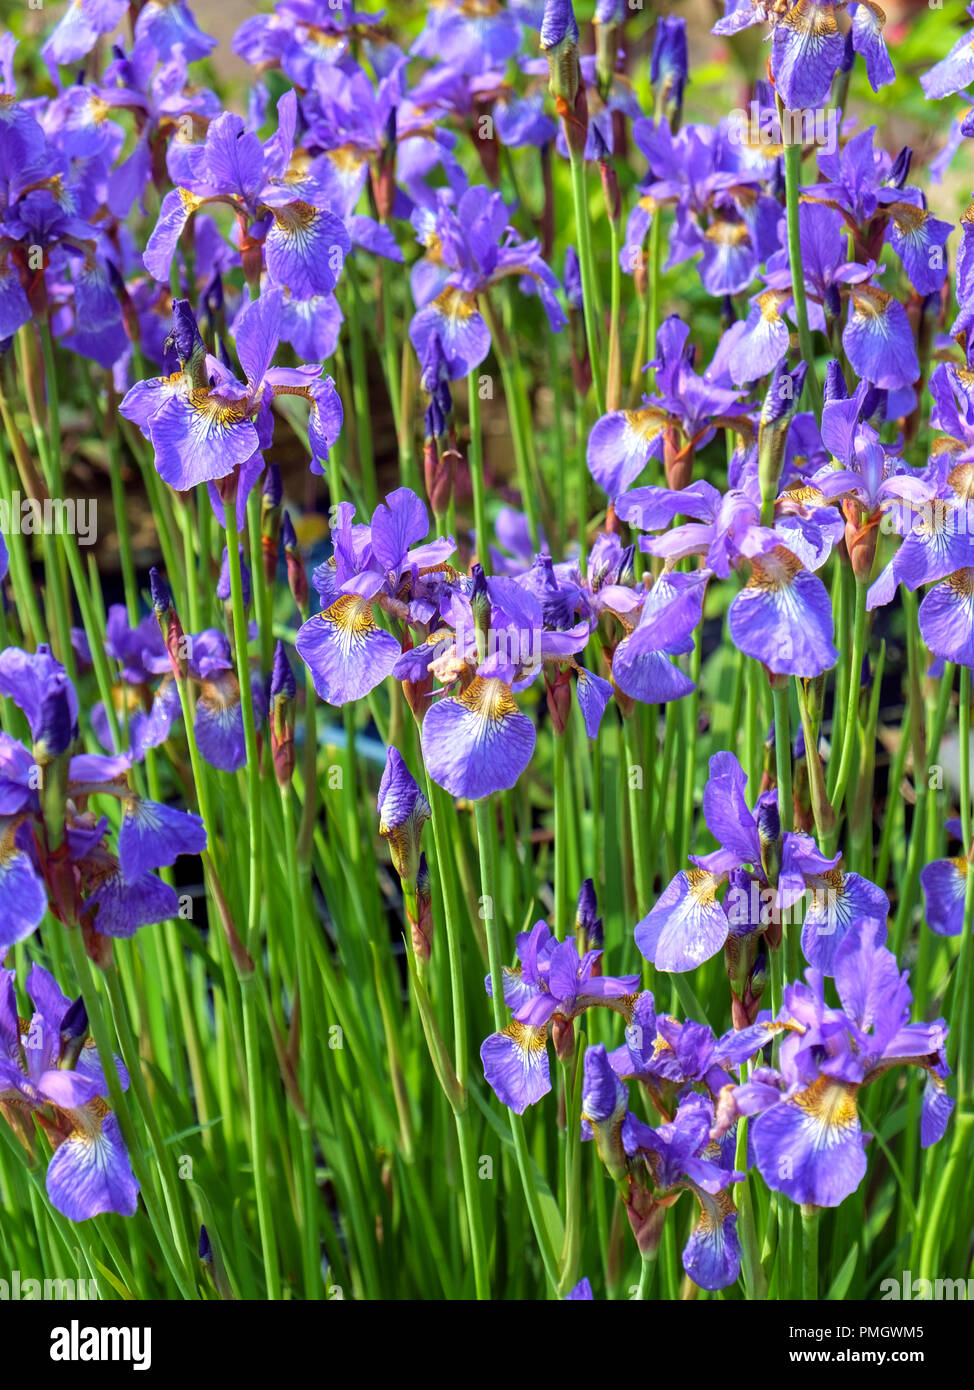 A mass of mauve iris flowers in a garden flowerbed. Stock Photo